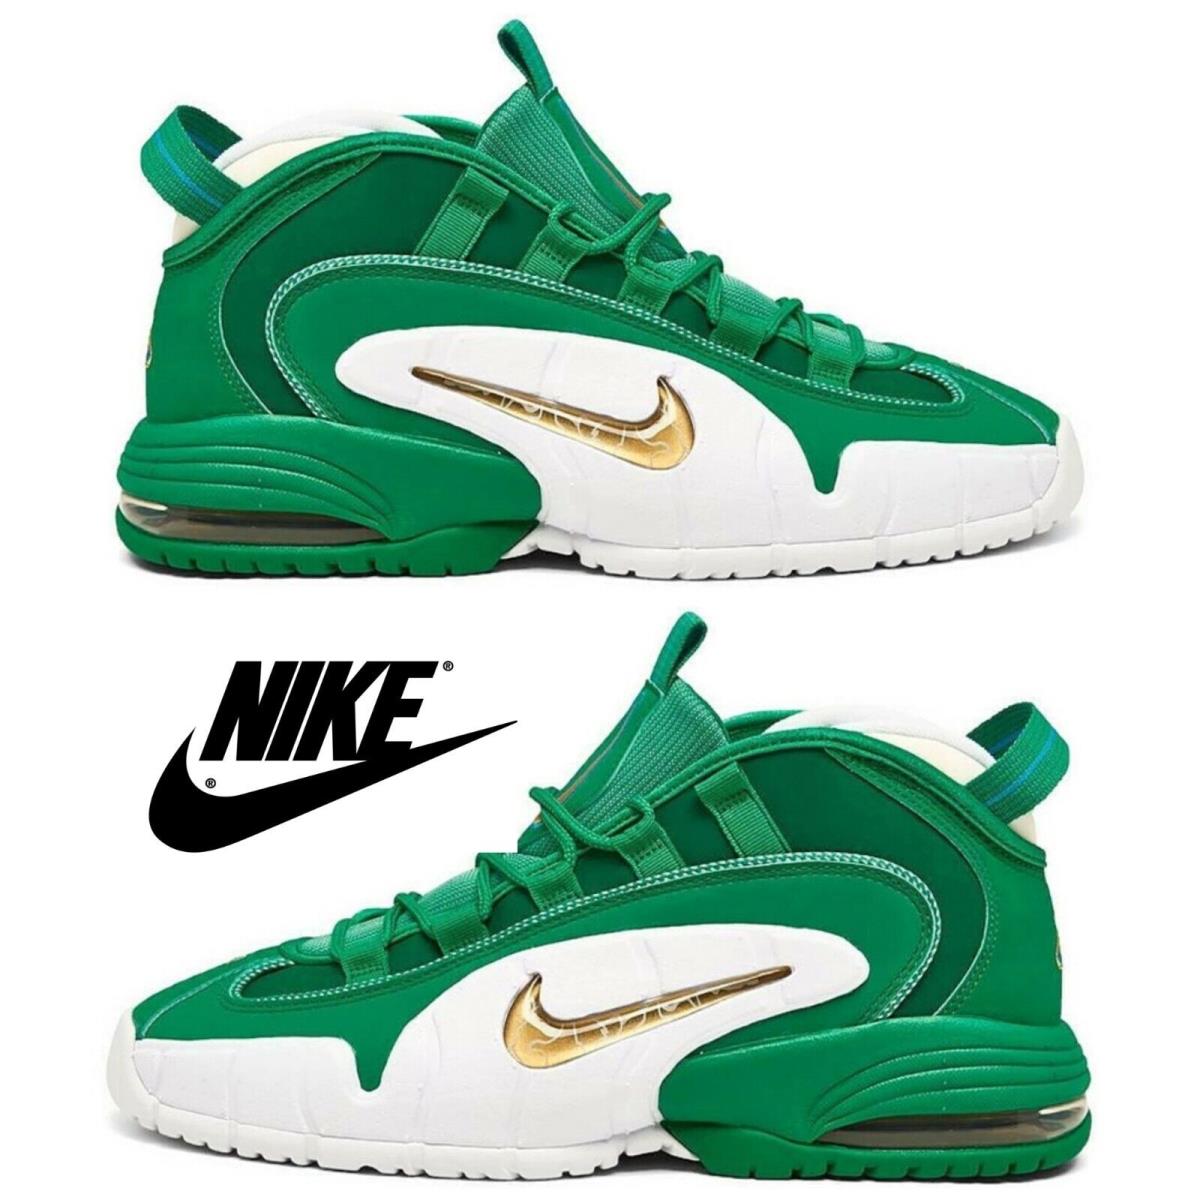 Nike Air Max Penny 1 Men`s Basketball Sneakers Comfort Lightweight Court Shoes - Green, Manufacturer: Stadium Green/Metallic Gold/White